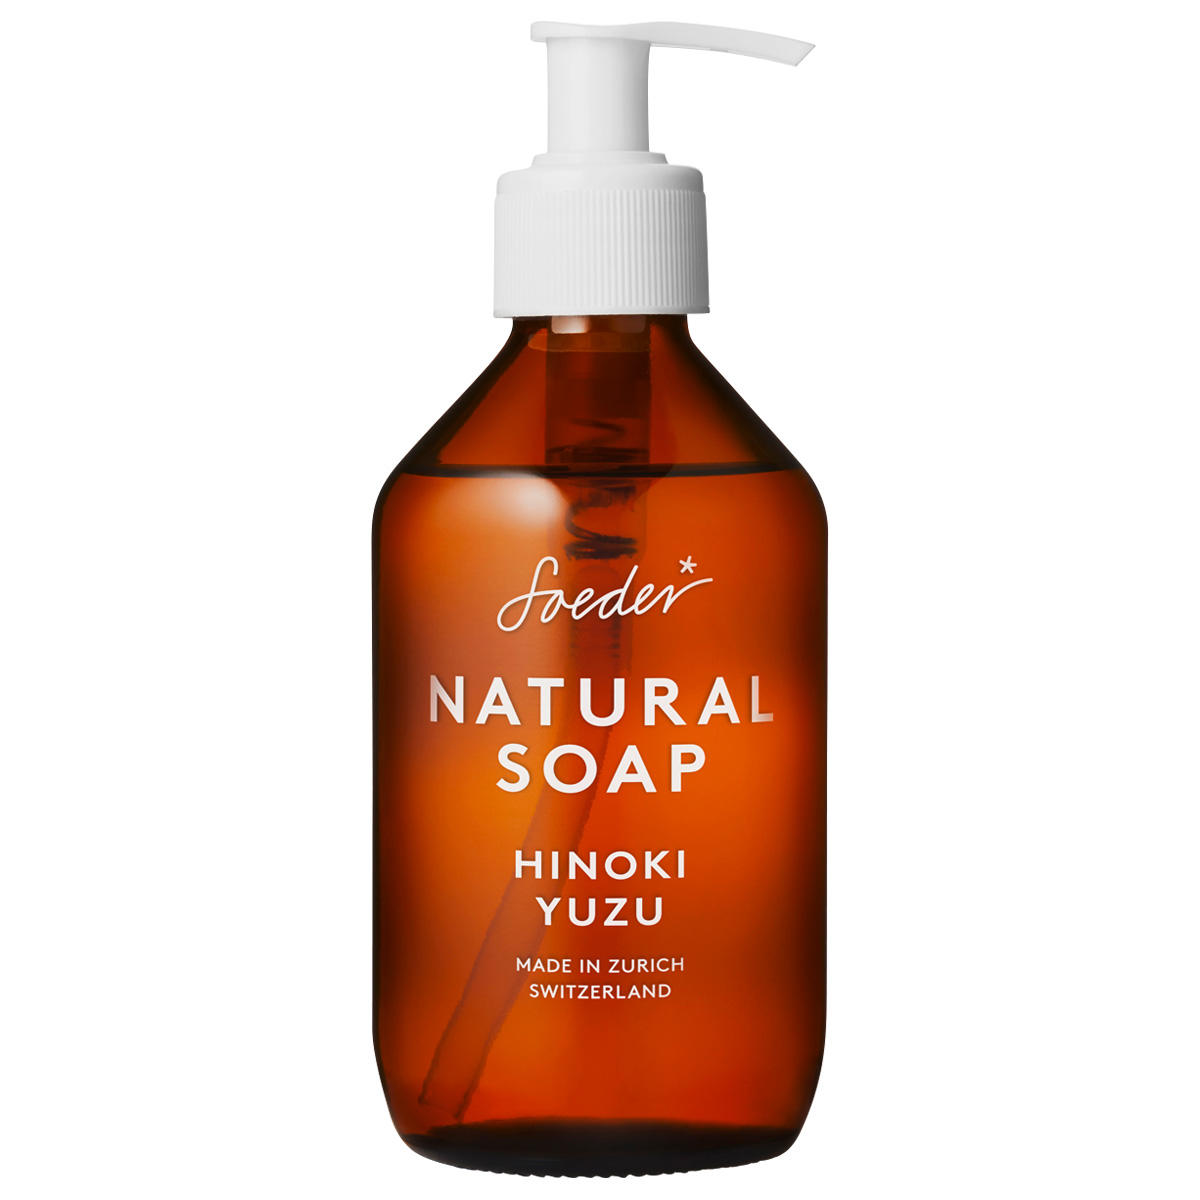 Soeder Natural Soap Hinoki Yuzu 250 ml - 1